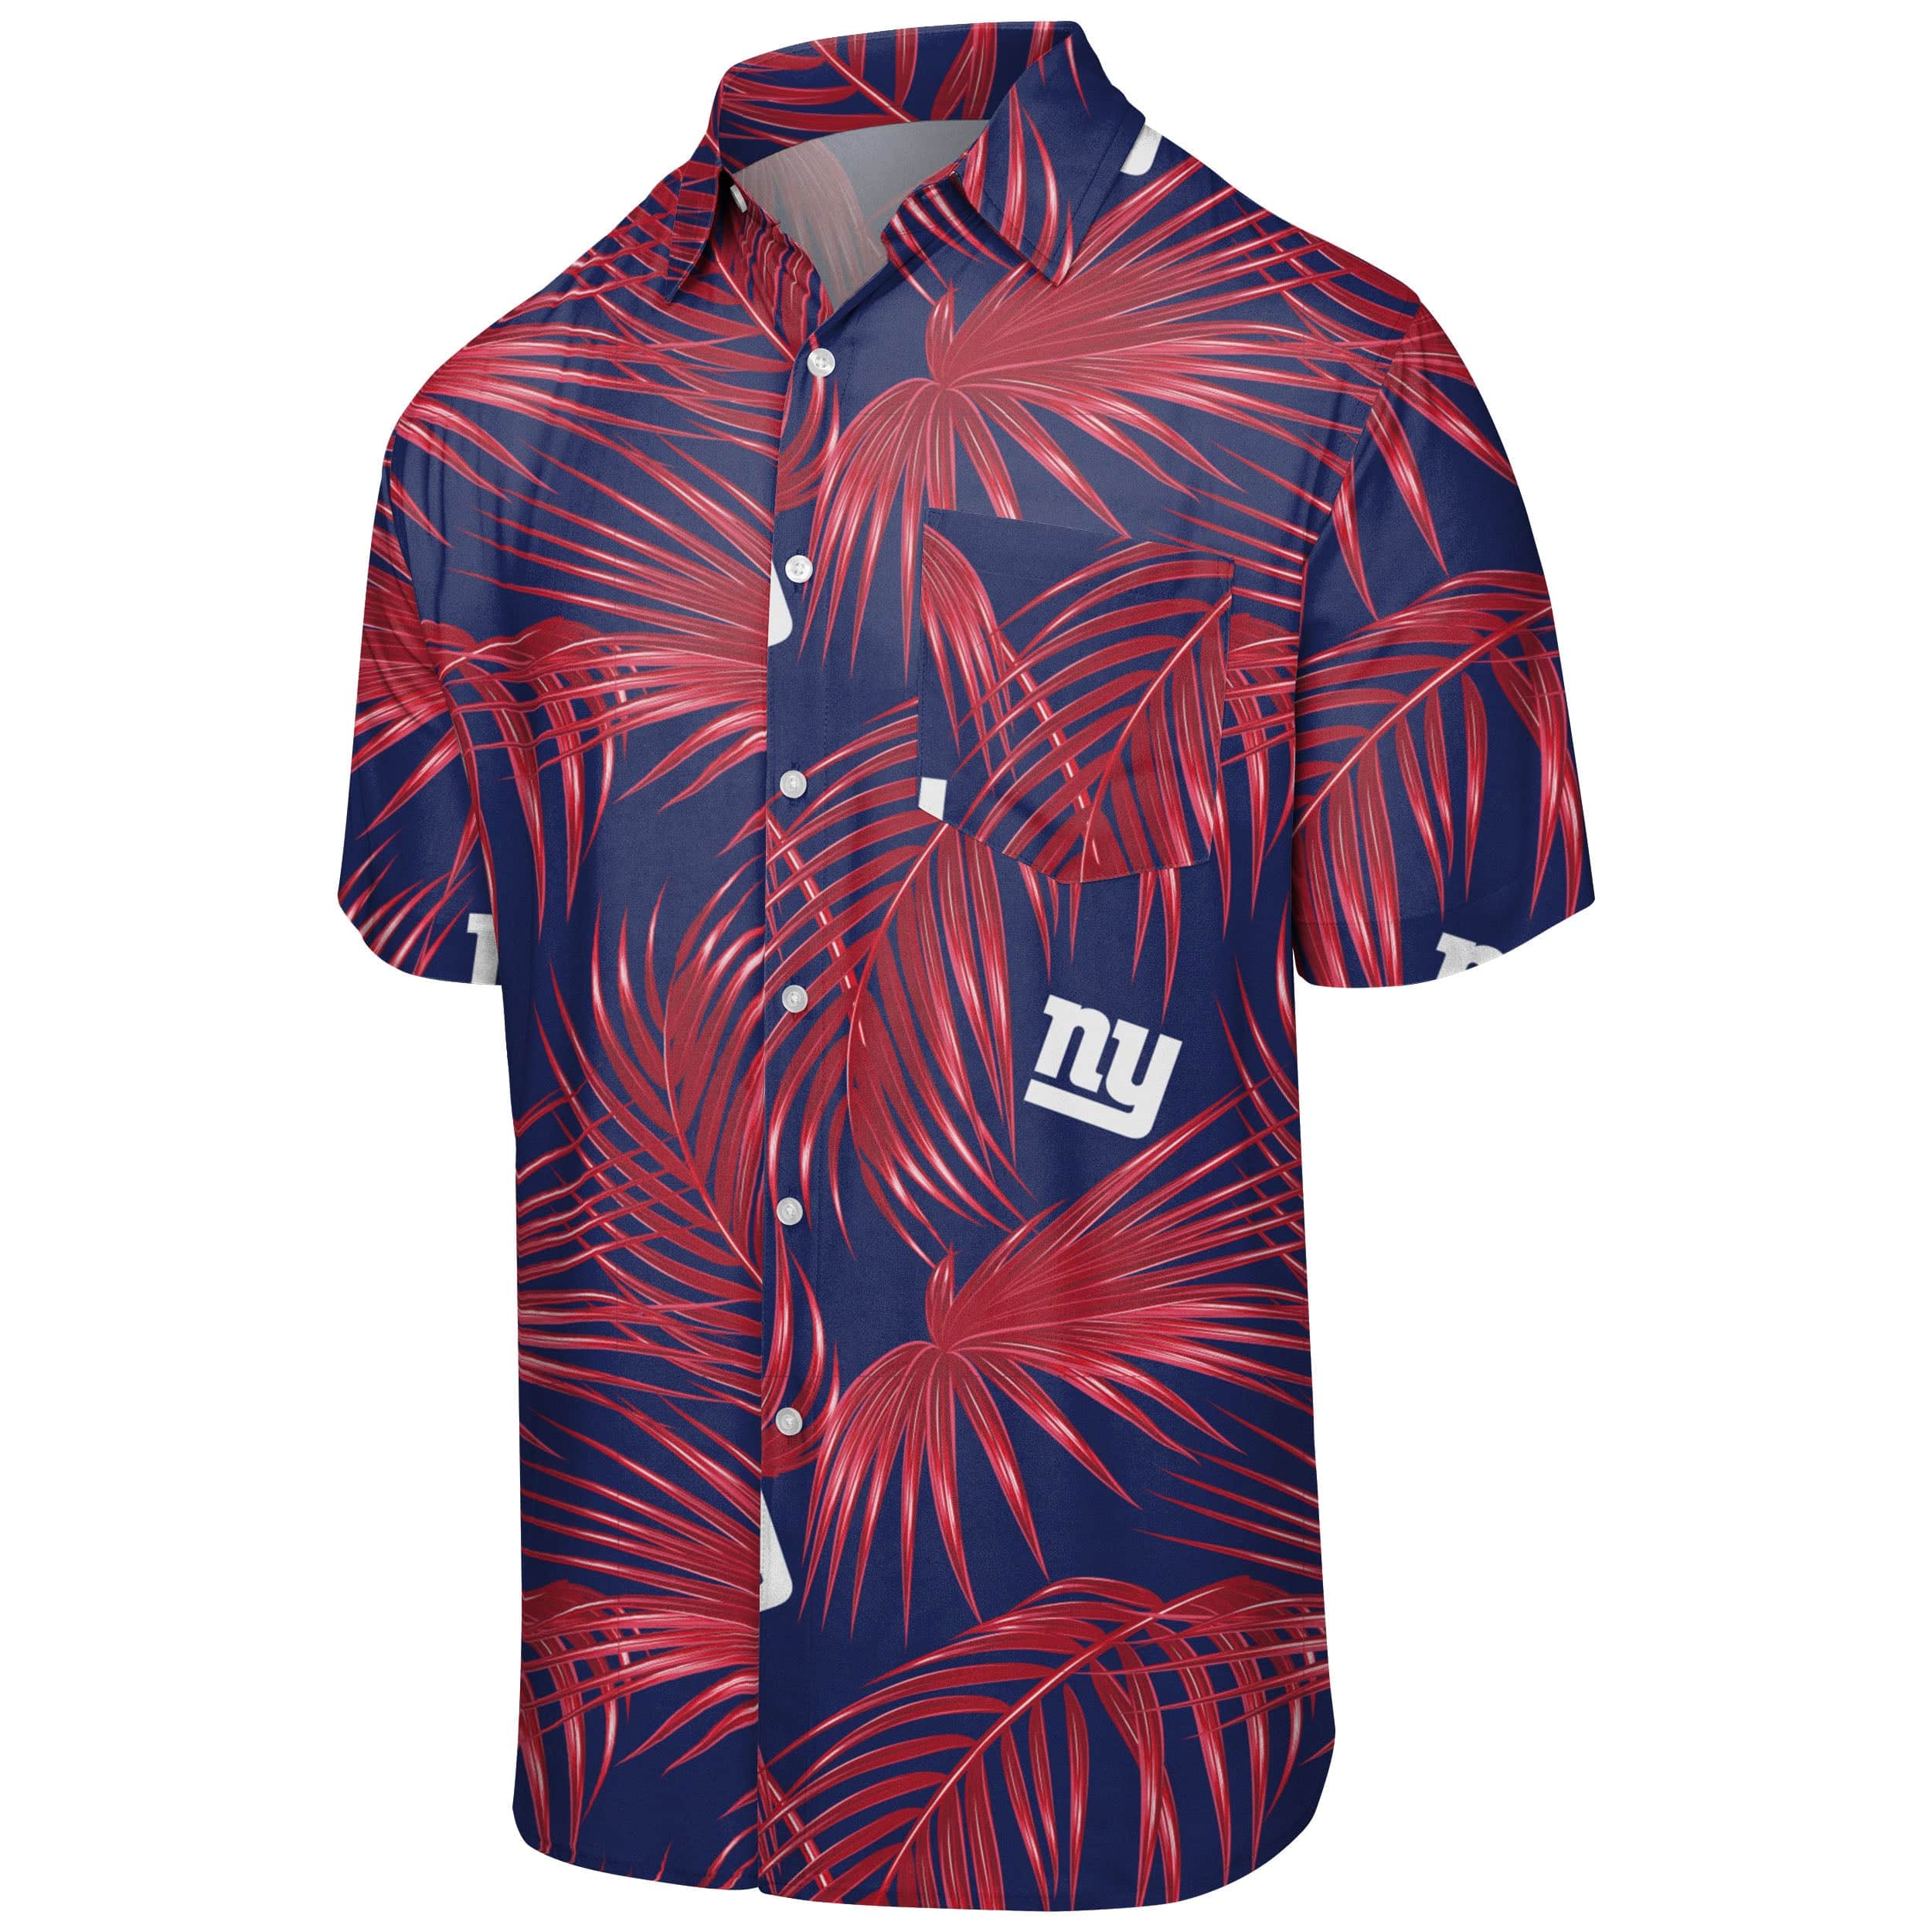 Nfl New York Giants Men's Shoestring Catch Polo T-shirt : Target